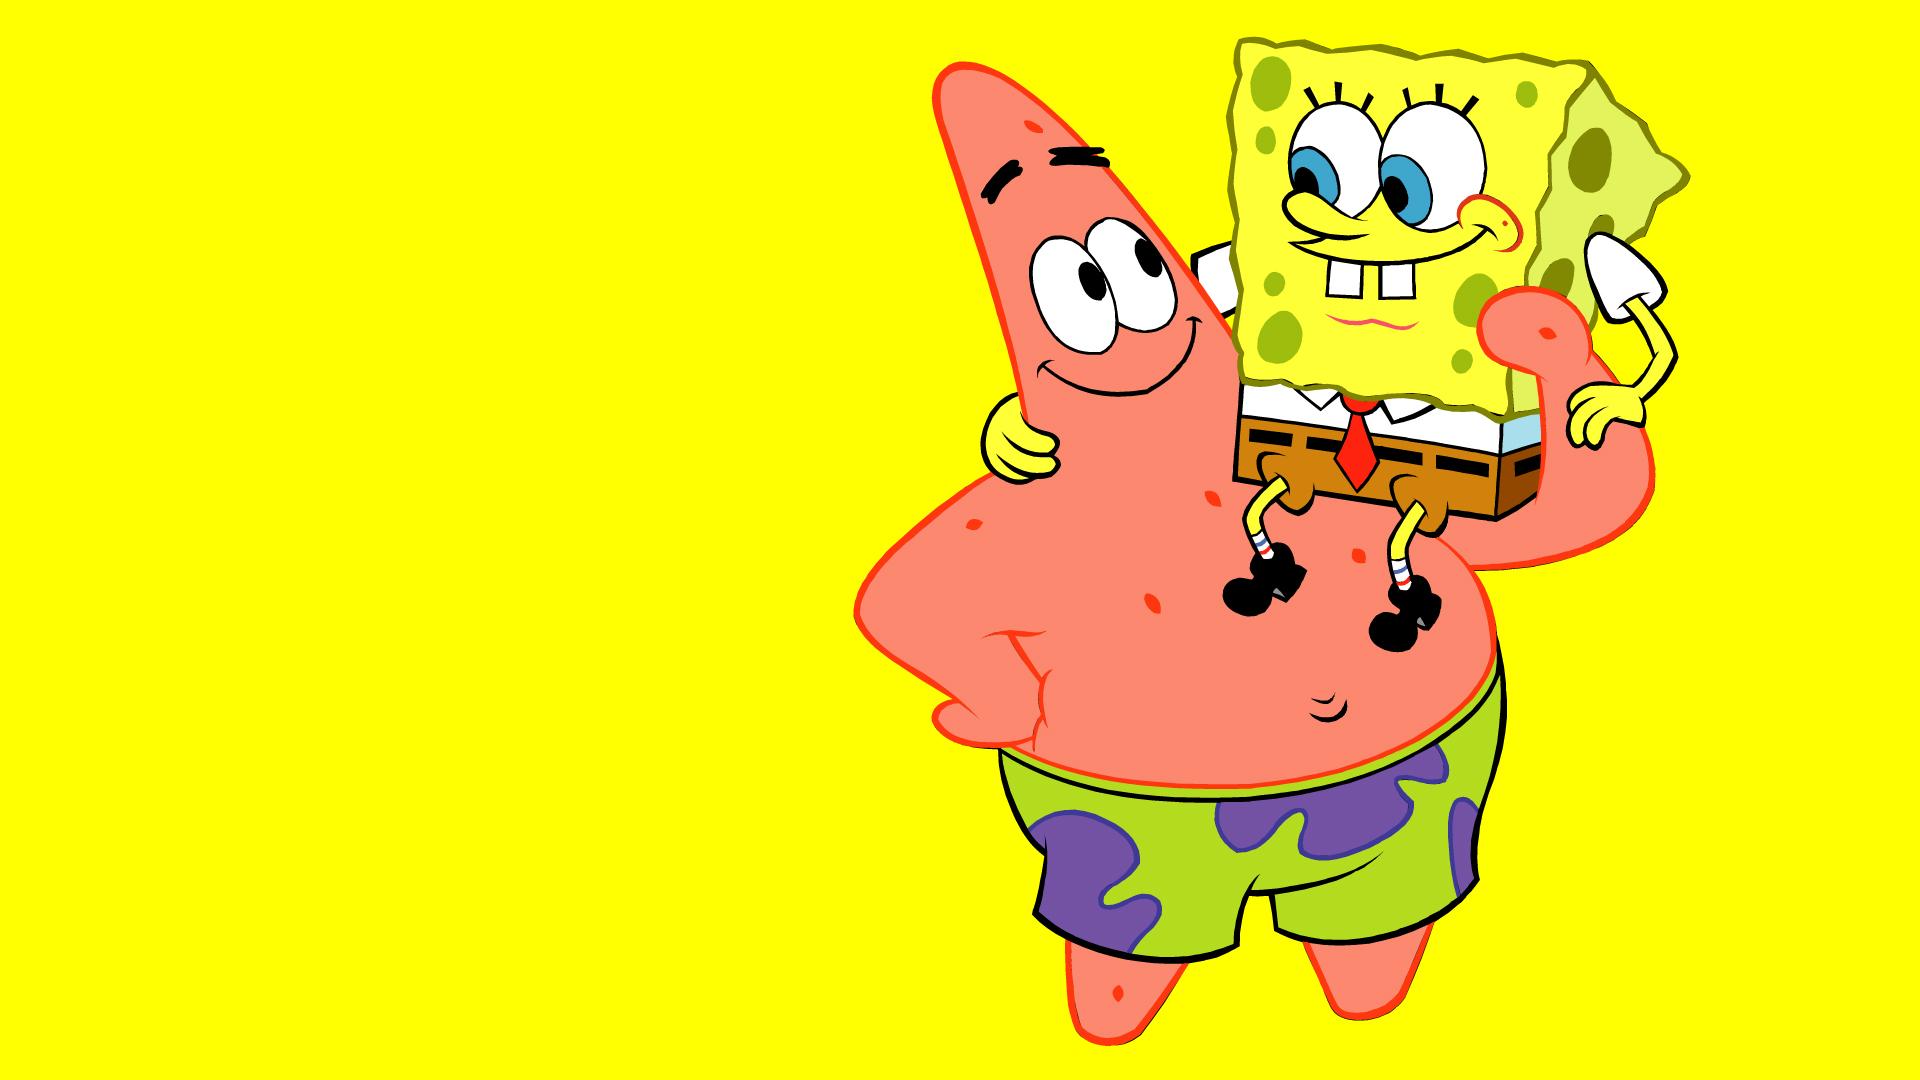 Spongebob and Patrick star (spongebob) Wallpaper